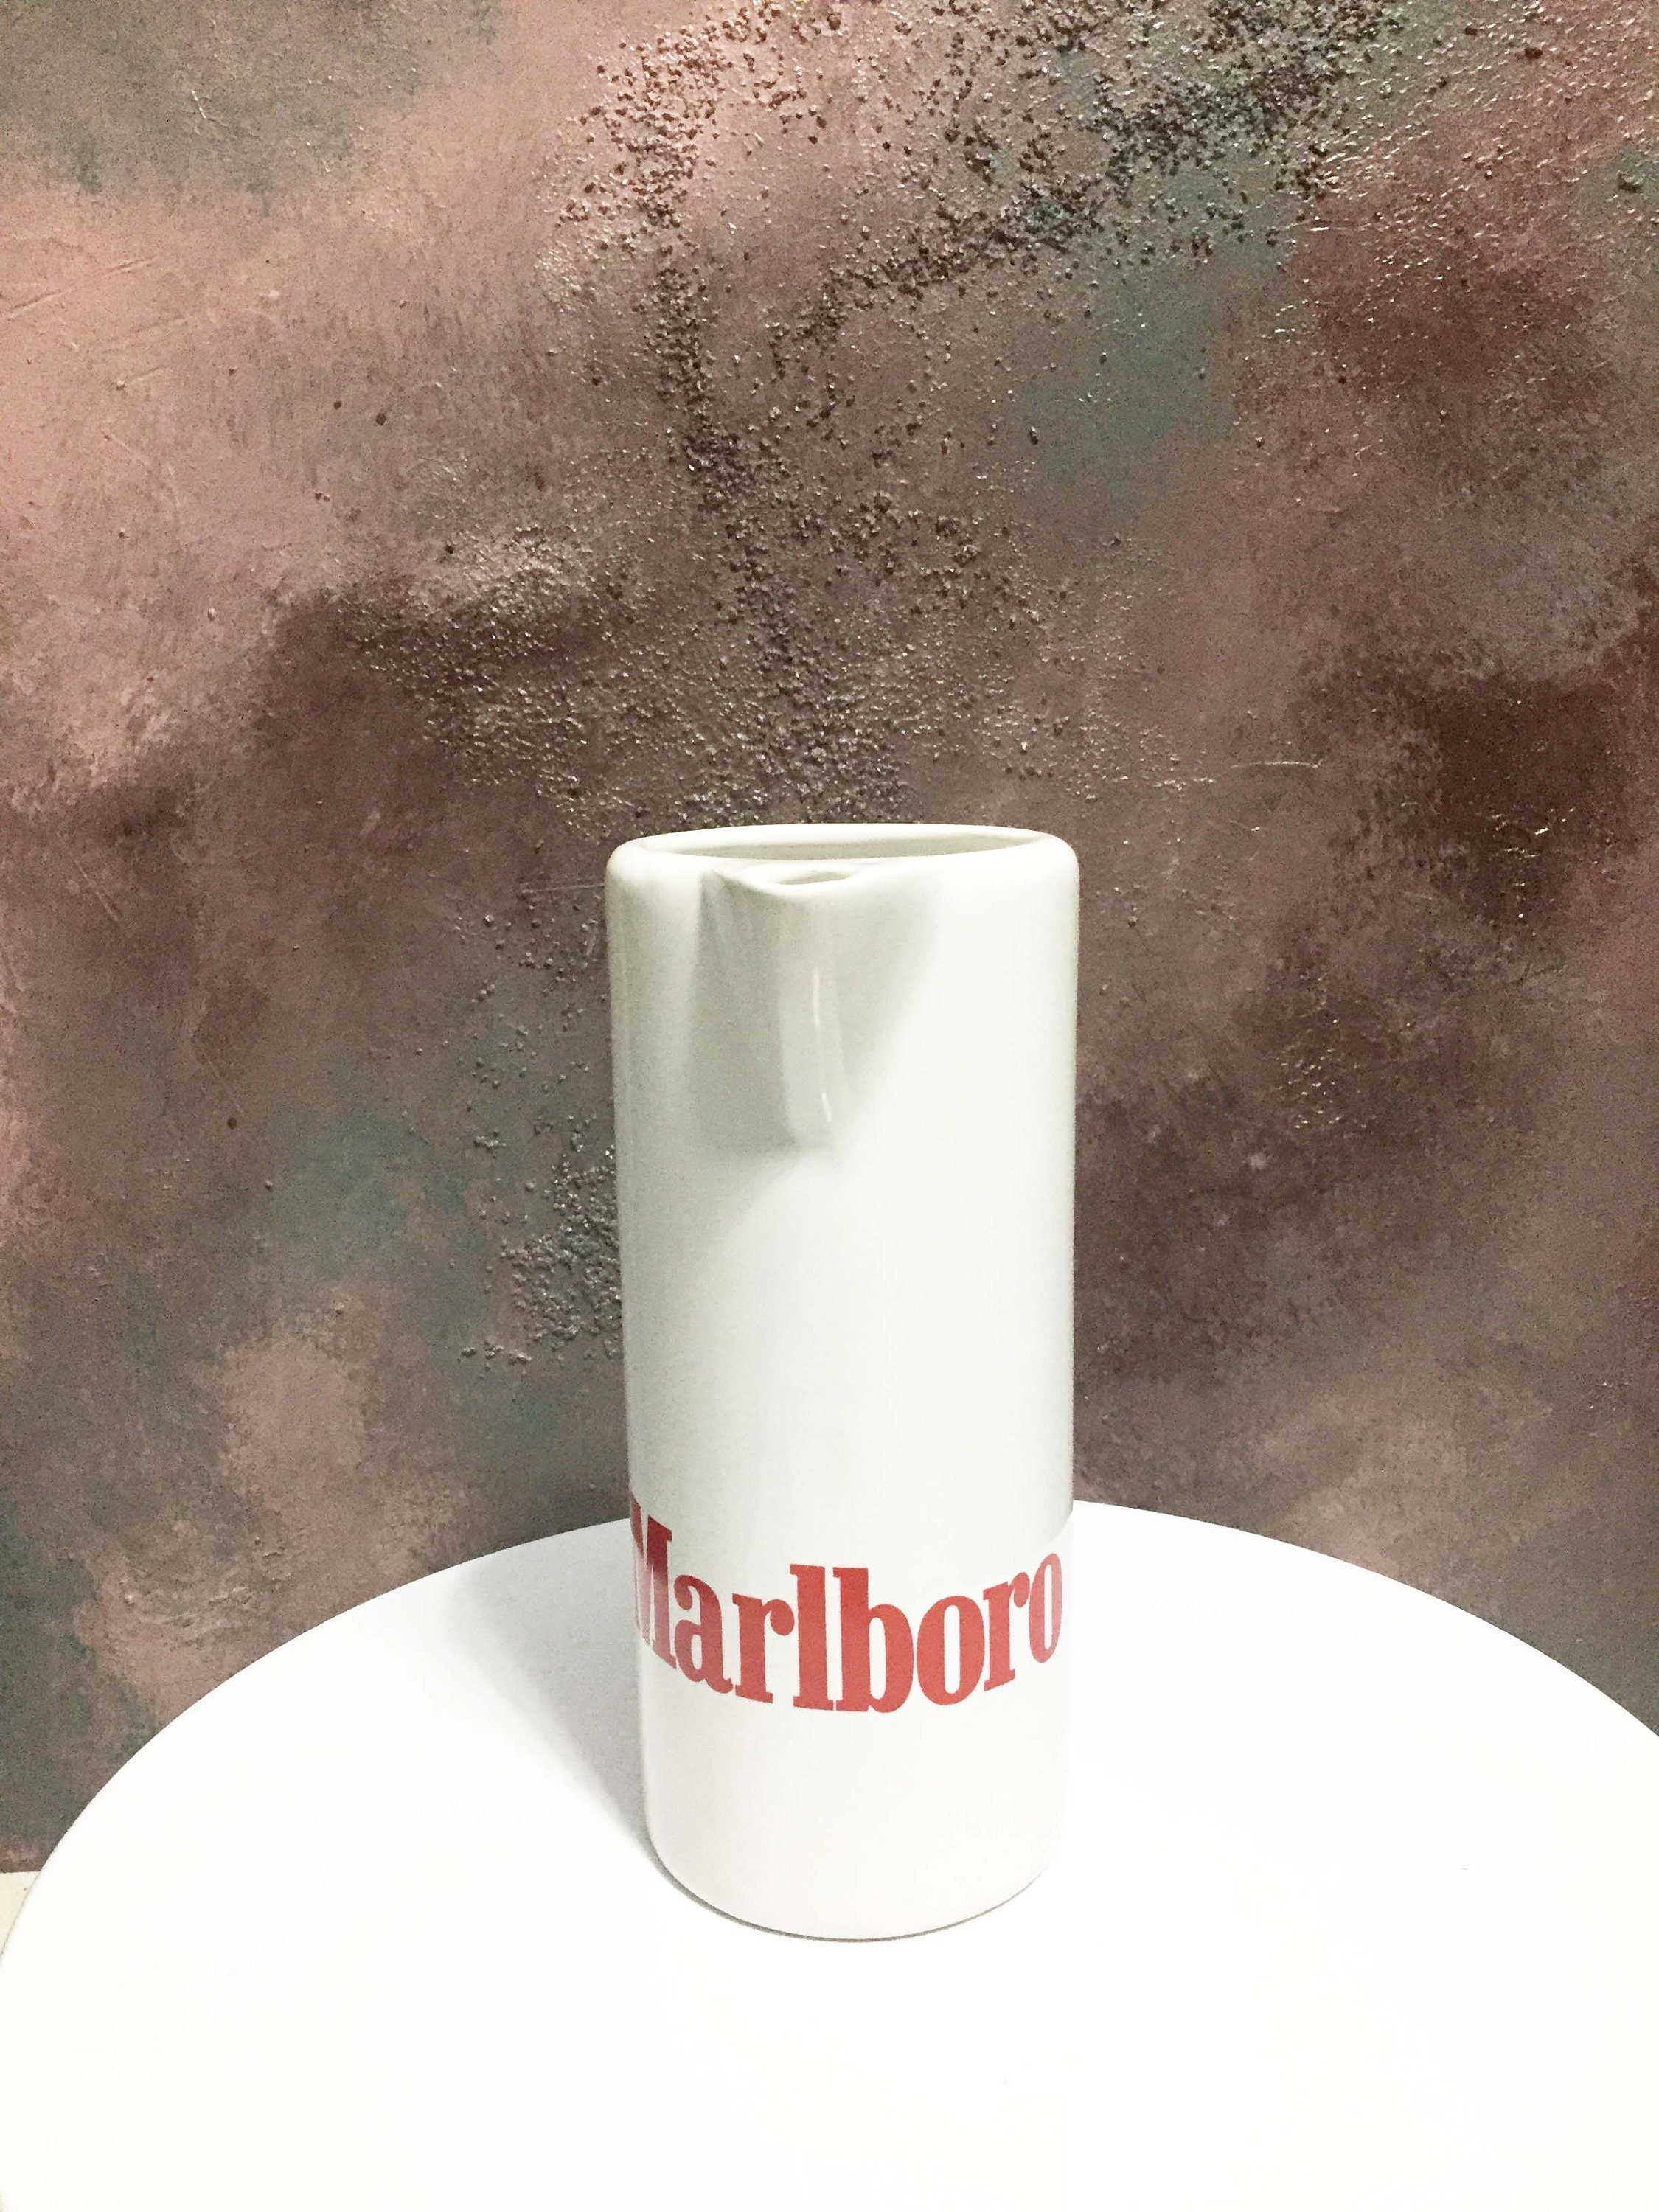 Marlboro Thermos Metal Thermos by Thermos Vintage Camping Beverage Thermos  Coffee Thermos Lunch Thermos ATC 